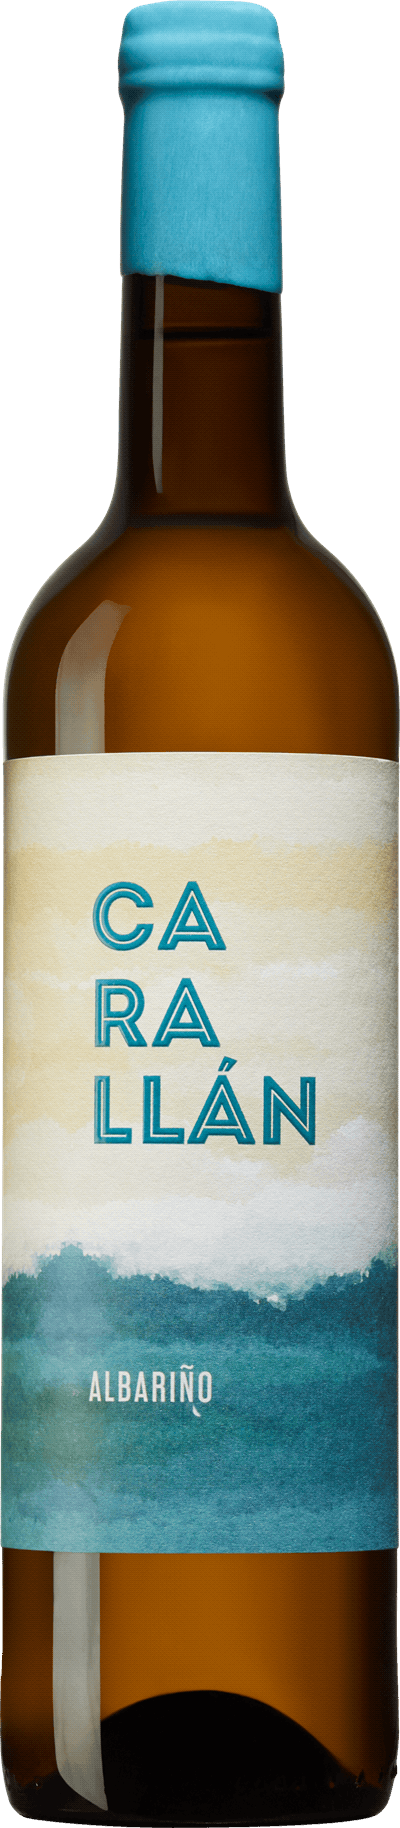 Produktbild för Carallán Albariño